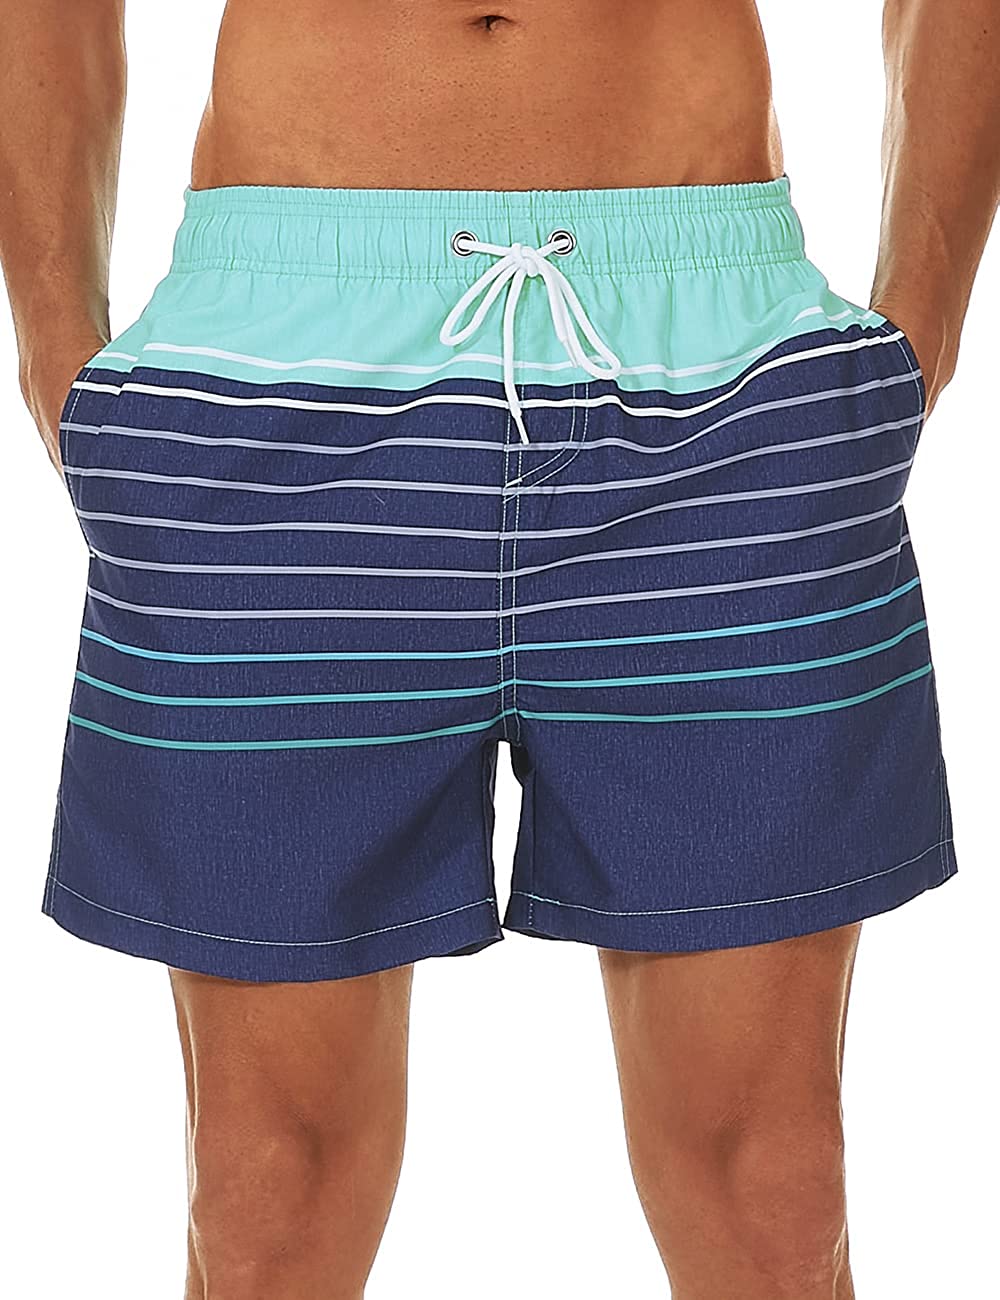 SILKWORLD Mens Swimming Shorts Quick Dry Beach Trunks Swimwear with Mesh Lining 